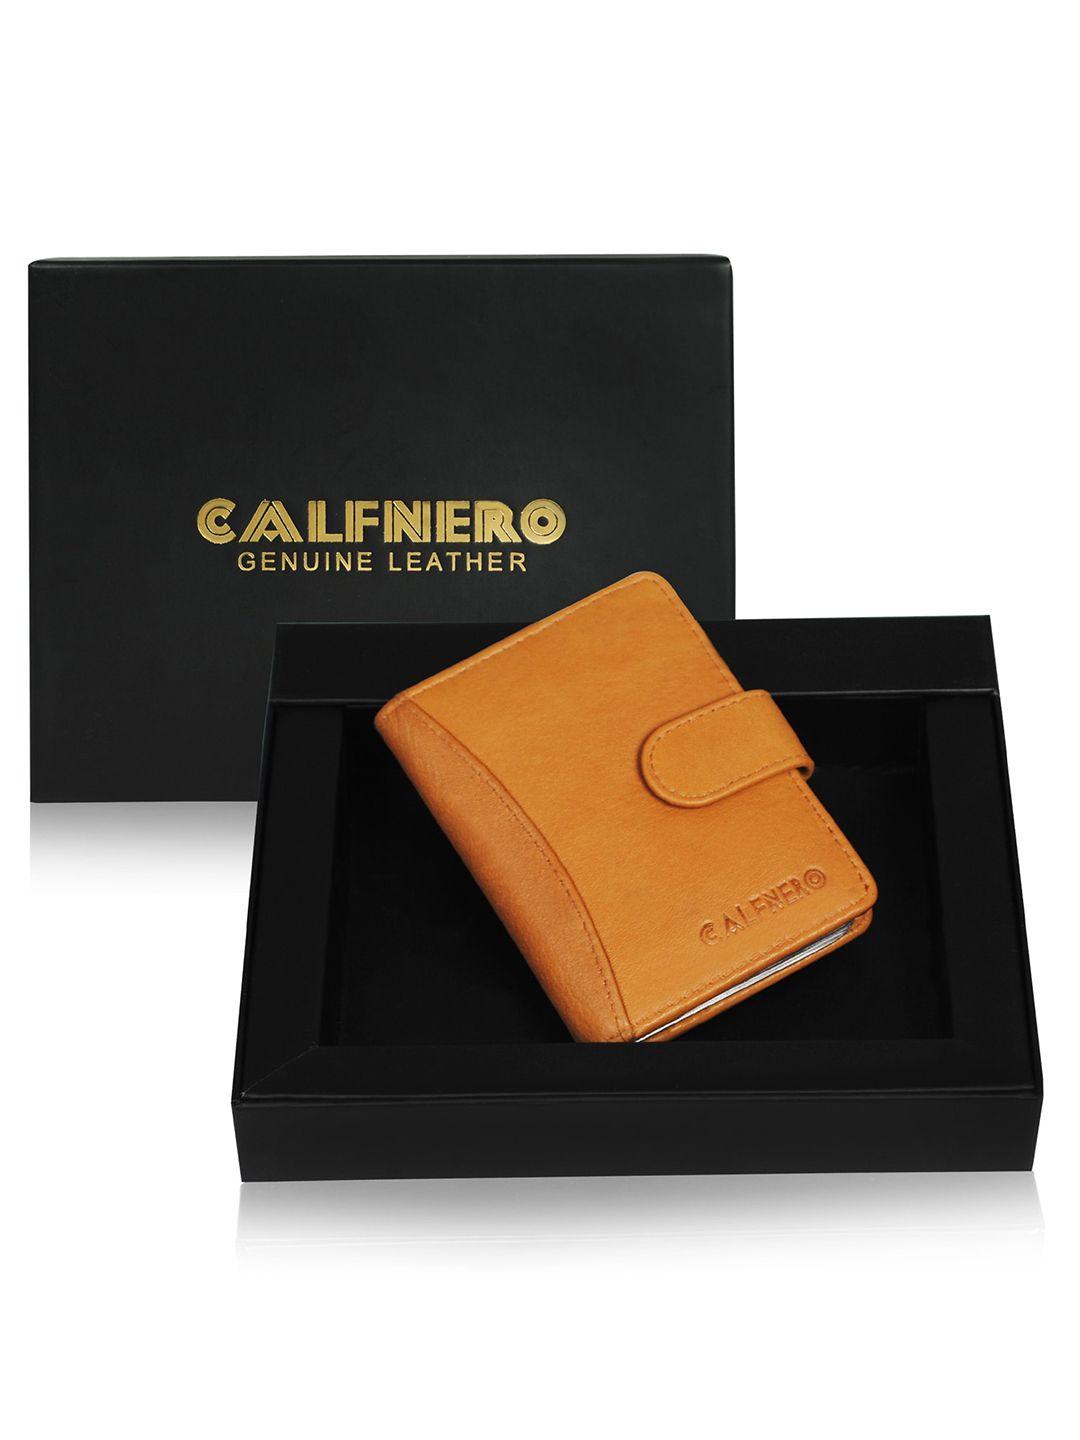 calfnero unisex leather card holder